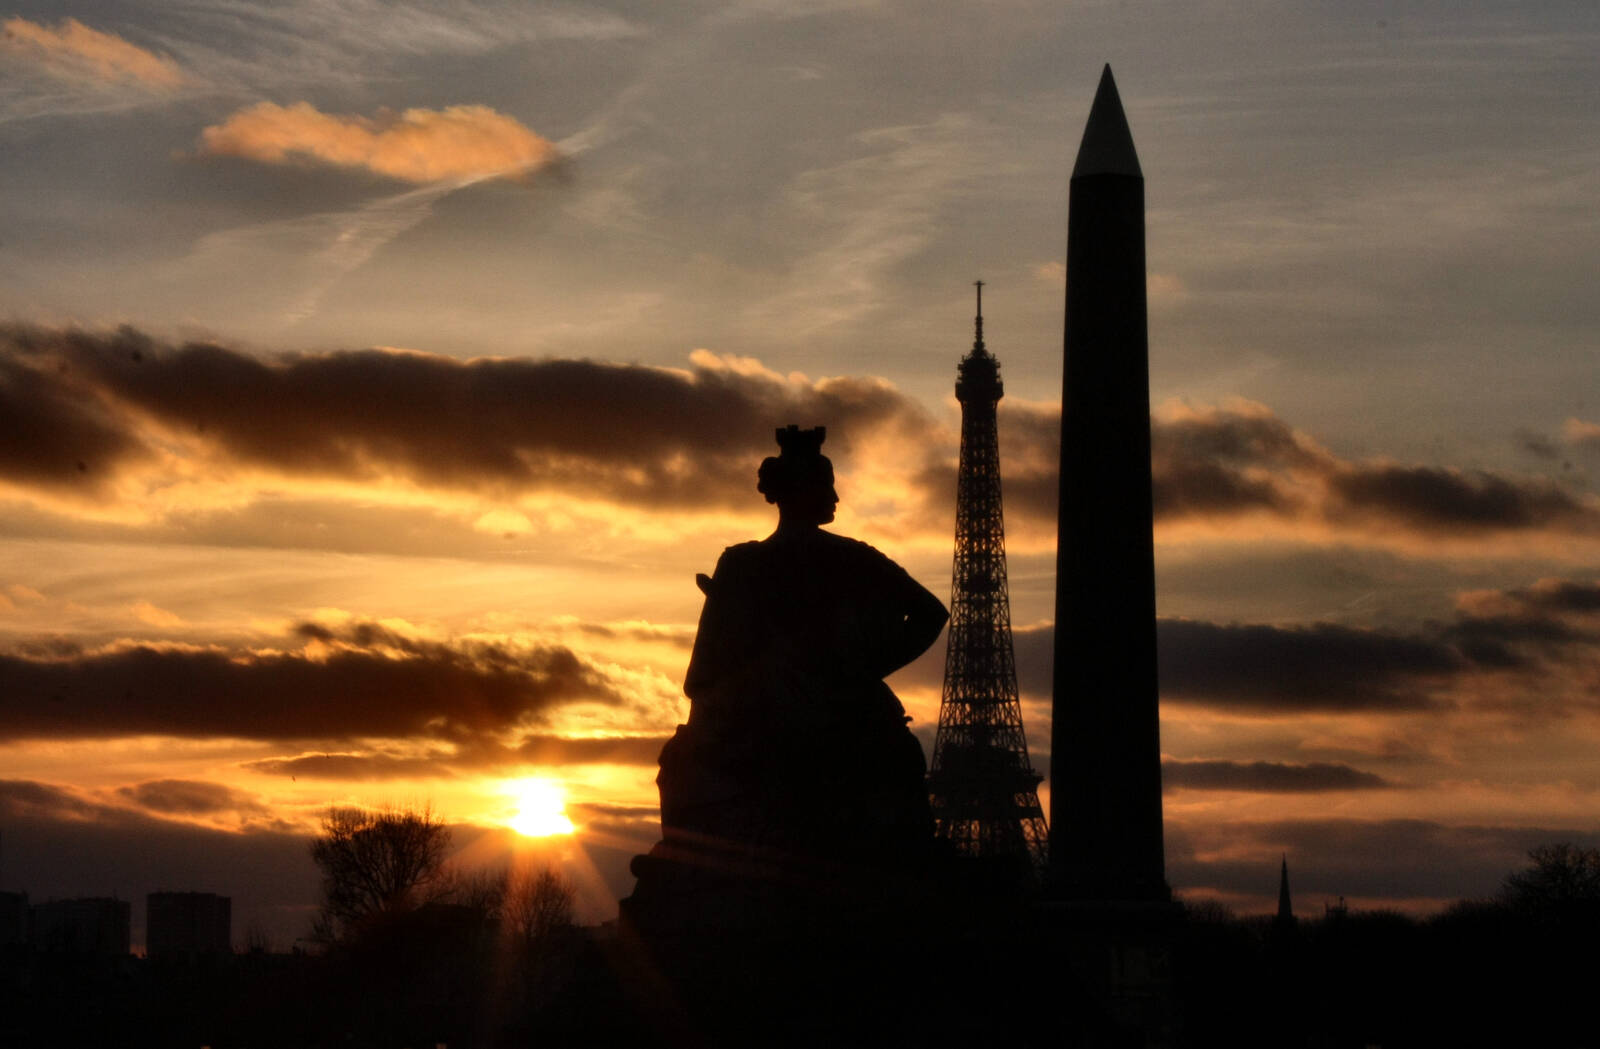 Image of Place de la Concorde by Jeff Abramowitz